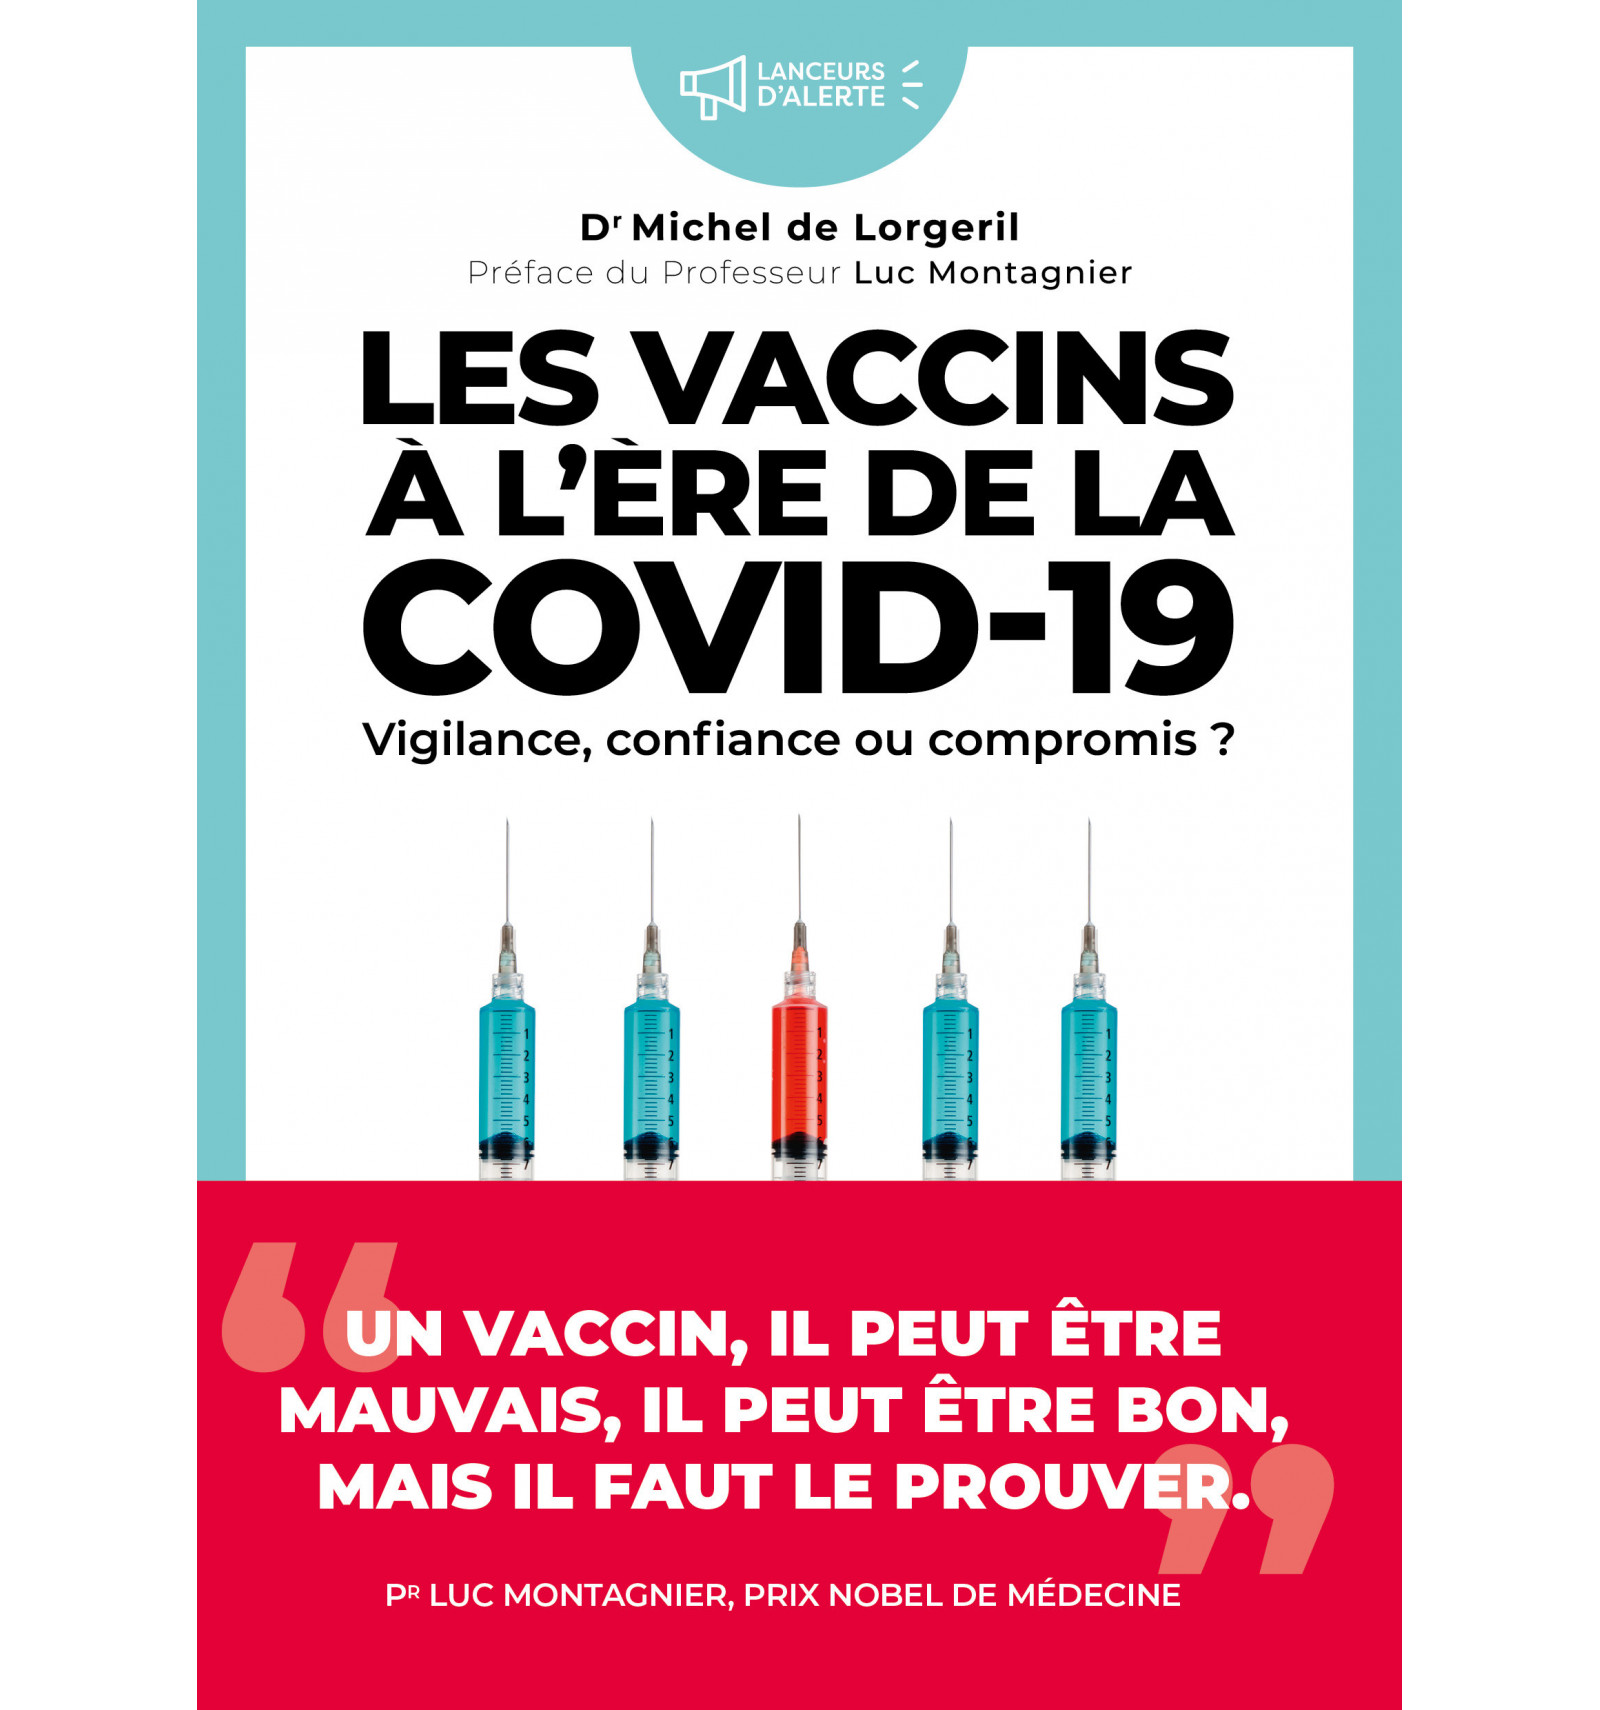 Les vaccins à l'ère de la Covid-19: un livre très instructif